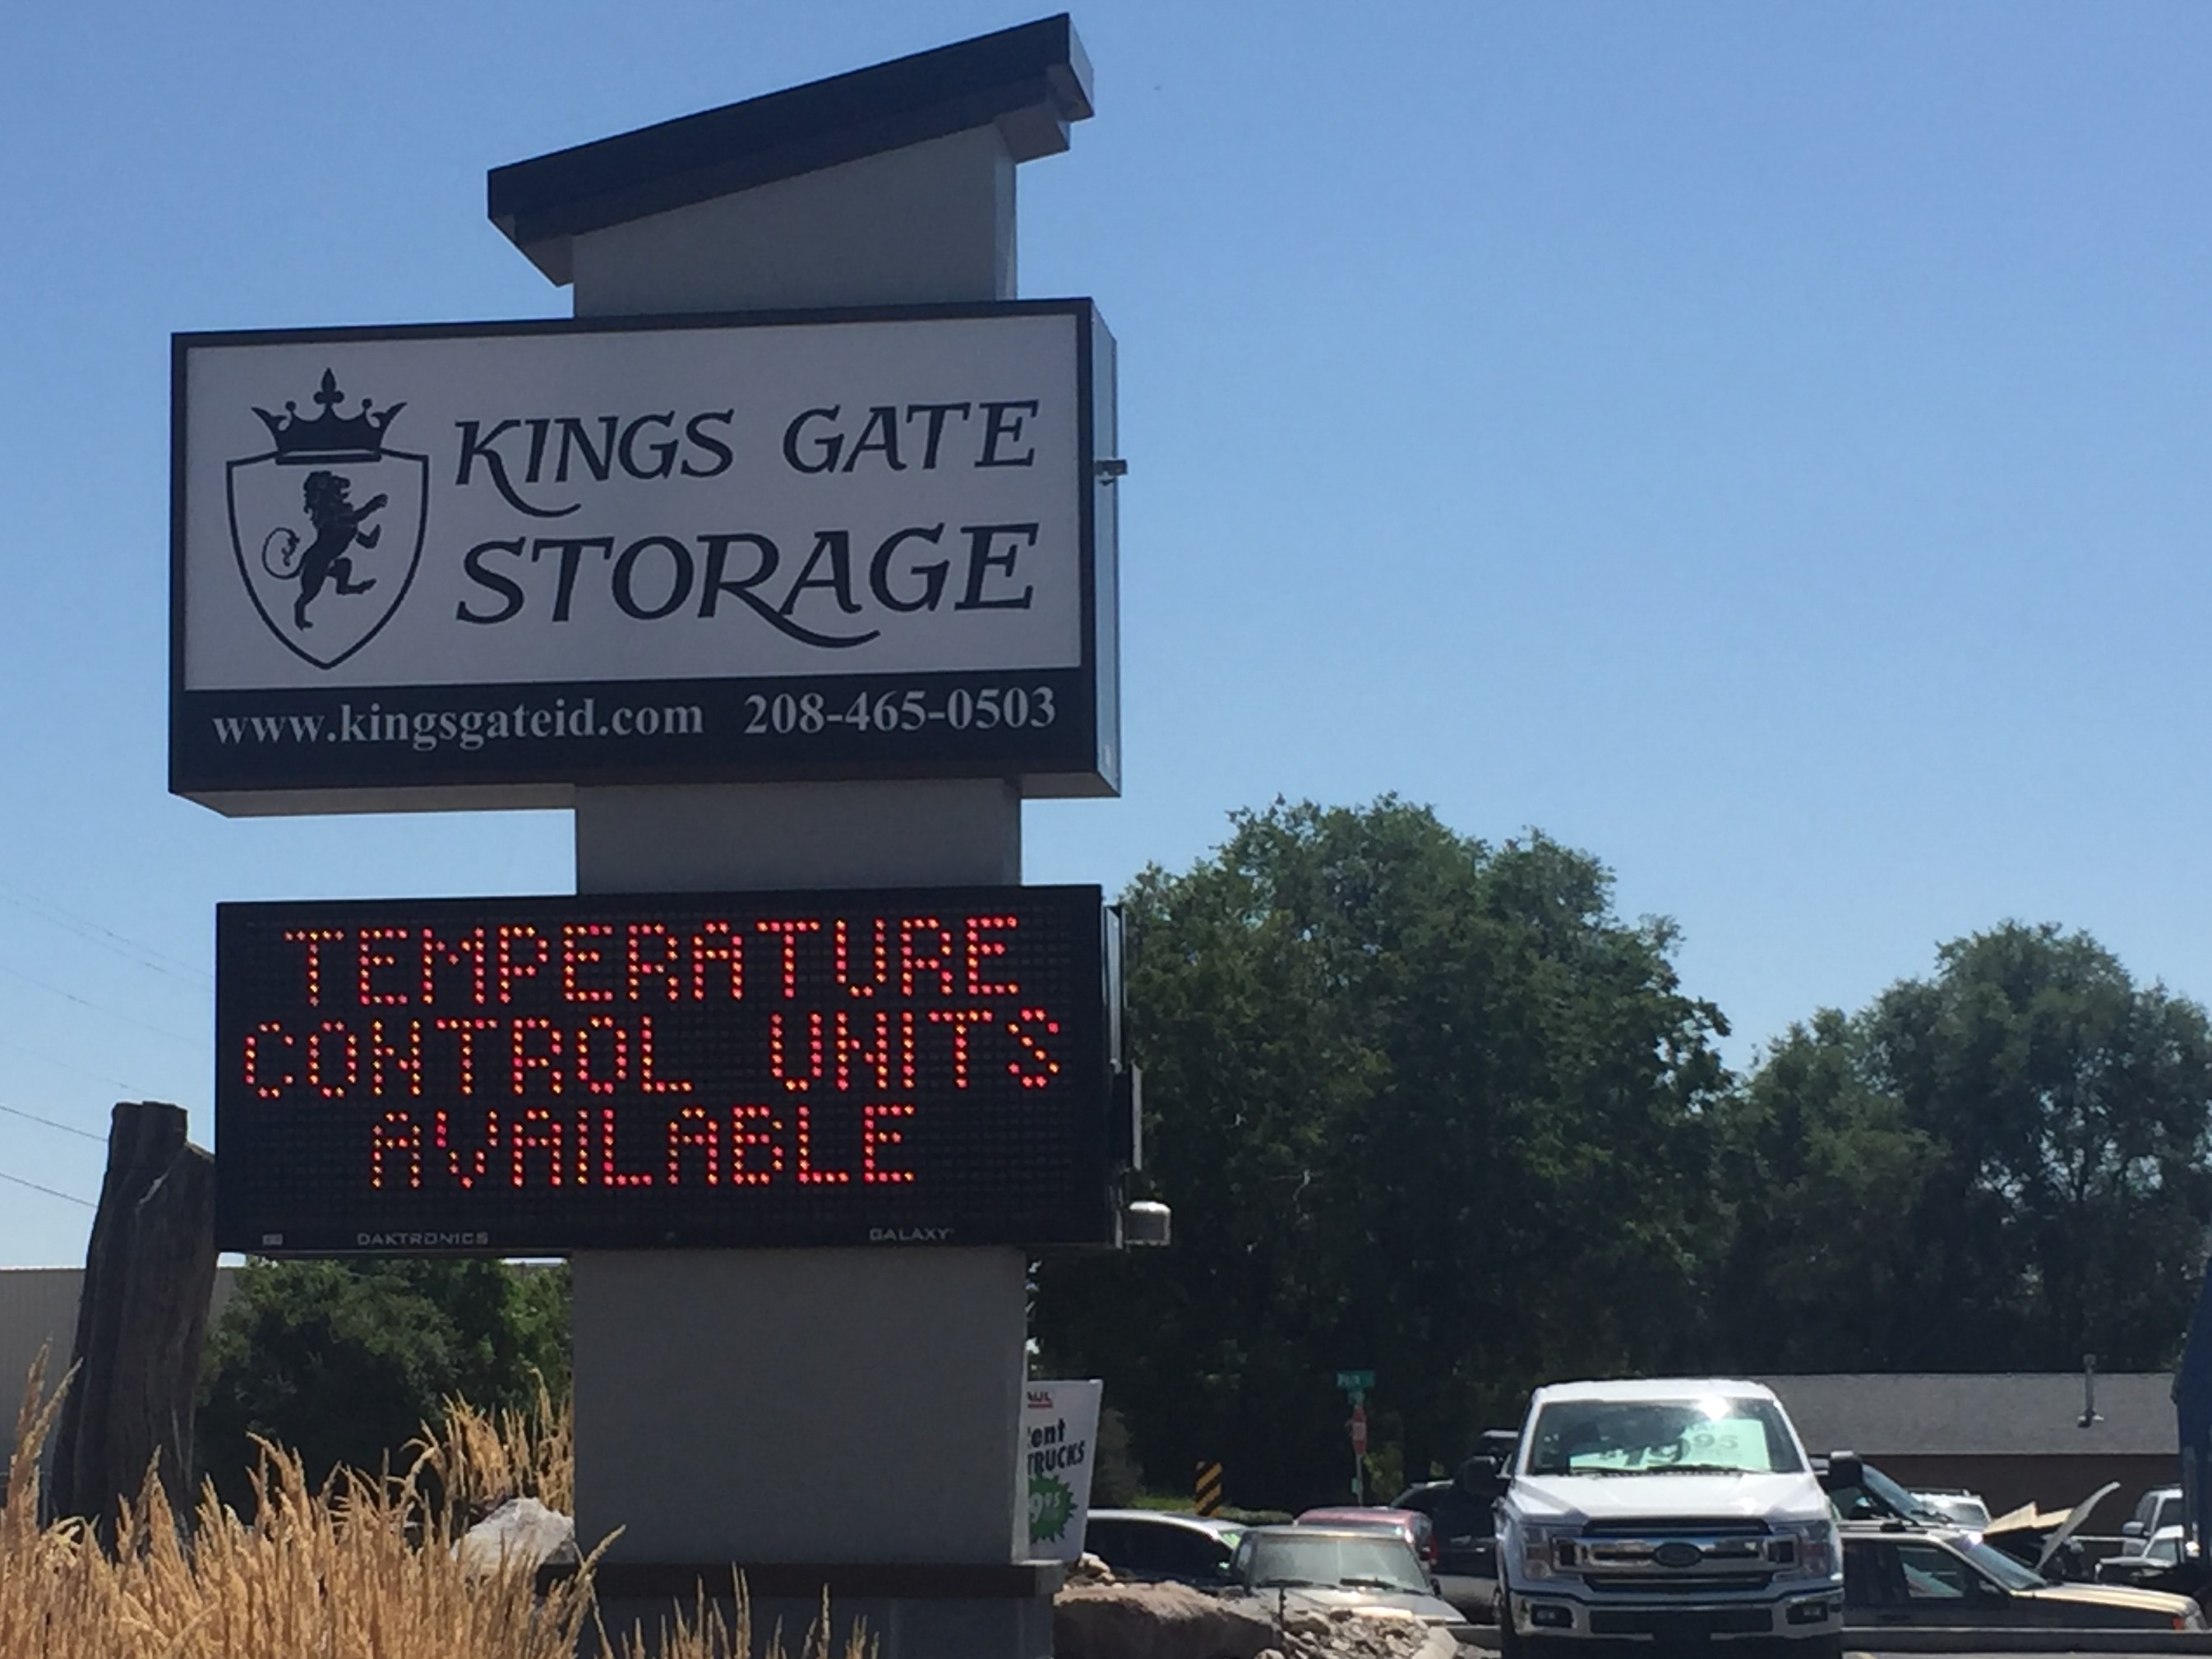 Kings Gate Storage